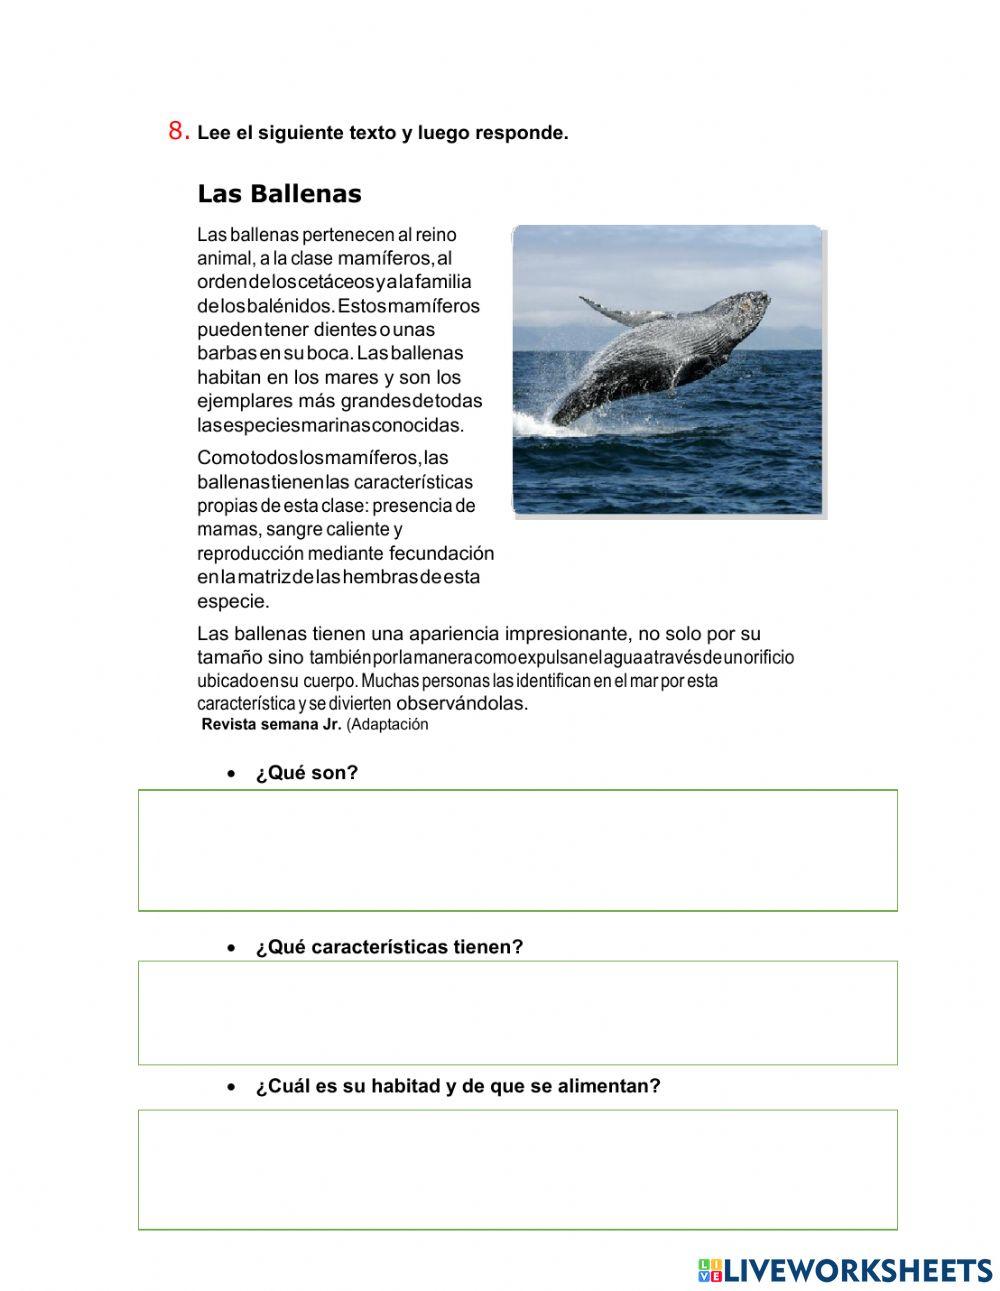 Evaluación lengua castelana semestre 1 worksheet | Live Worksheets